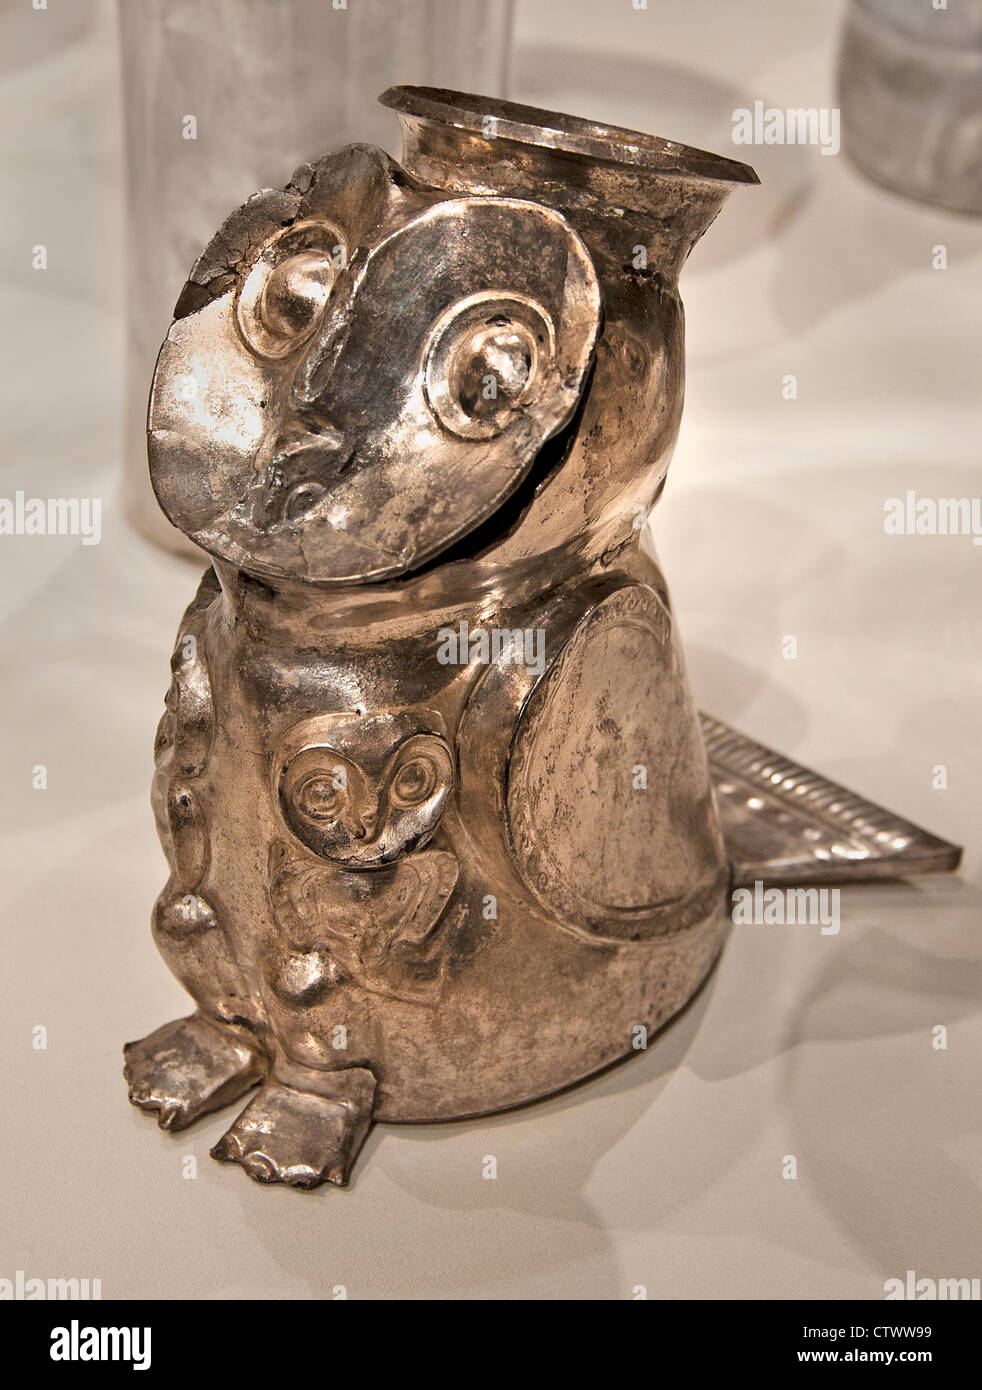 Eule Schiff 14. – 15. Jahrhundert Peru Kultur Chimú Silber H. 6 1/2 X W. 3 x D. 6 Zoll (16,5 x 7,6 x 15,2 cm) Stockfoto